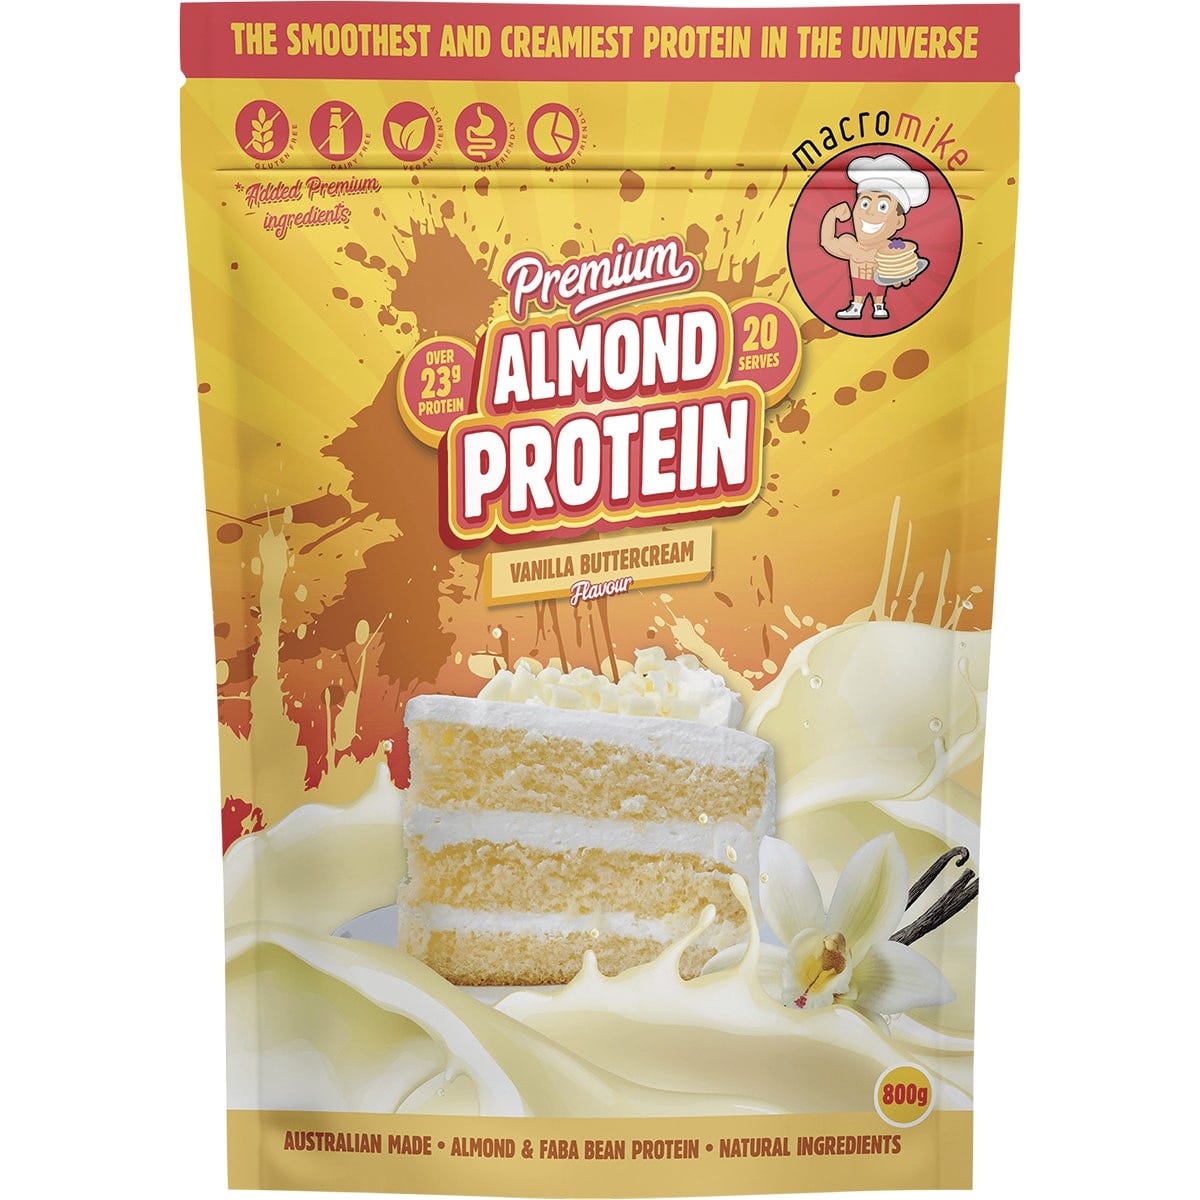 Premium Almond Protein Vanilla Buttercream